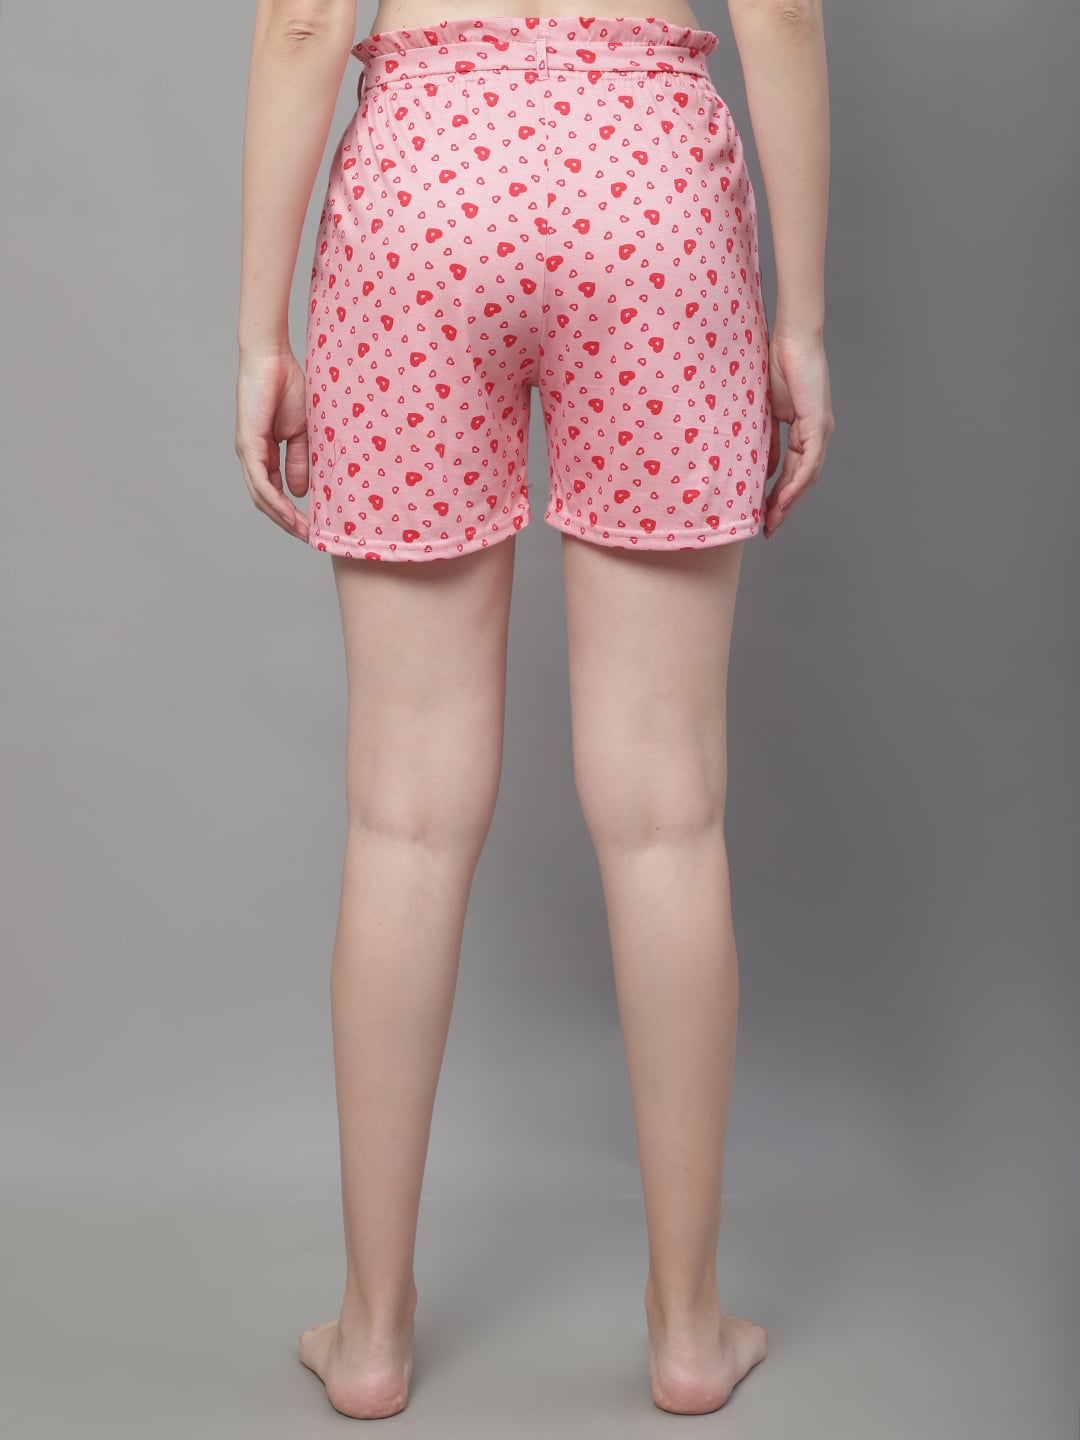 Pink Color Floral Printed Cotton Shorts For Woman Claura Designs Pvt. Ltd. Lounge Shorts Cotton, Floral, Lounge Short, Loungeshort_size, Pink, short, Sleepwear